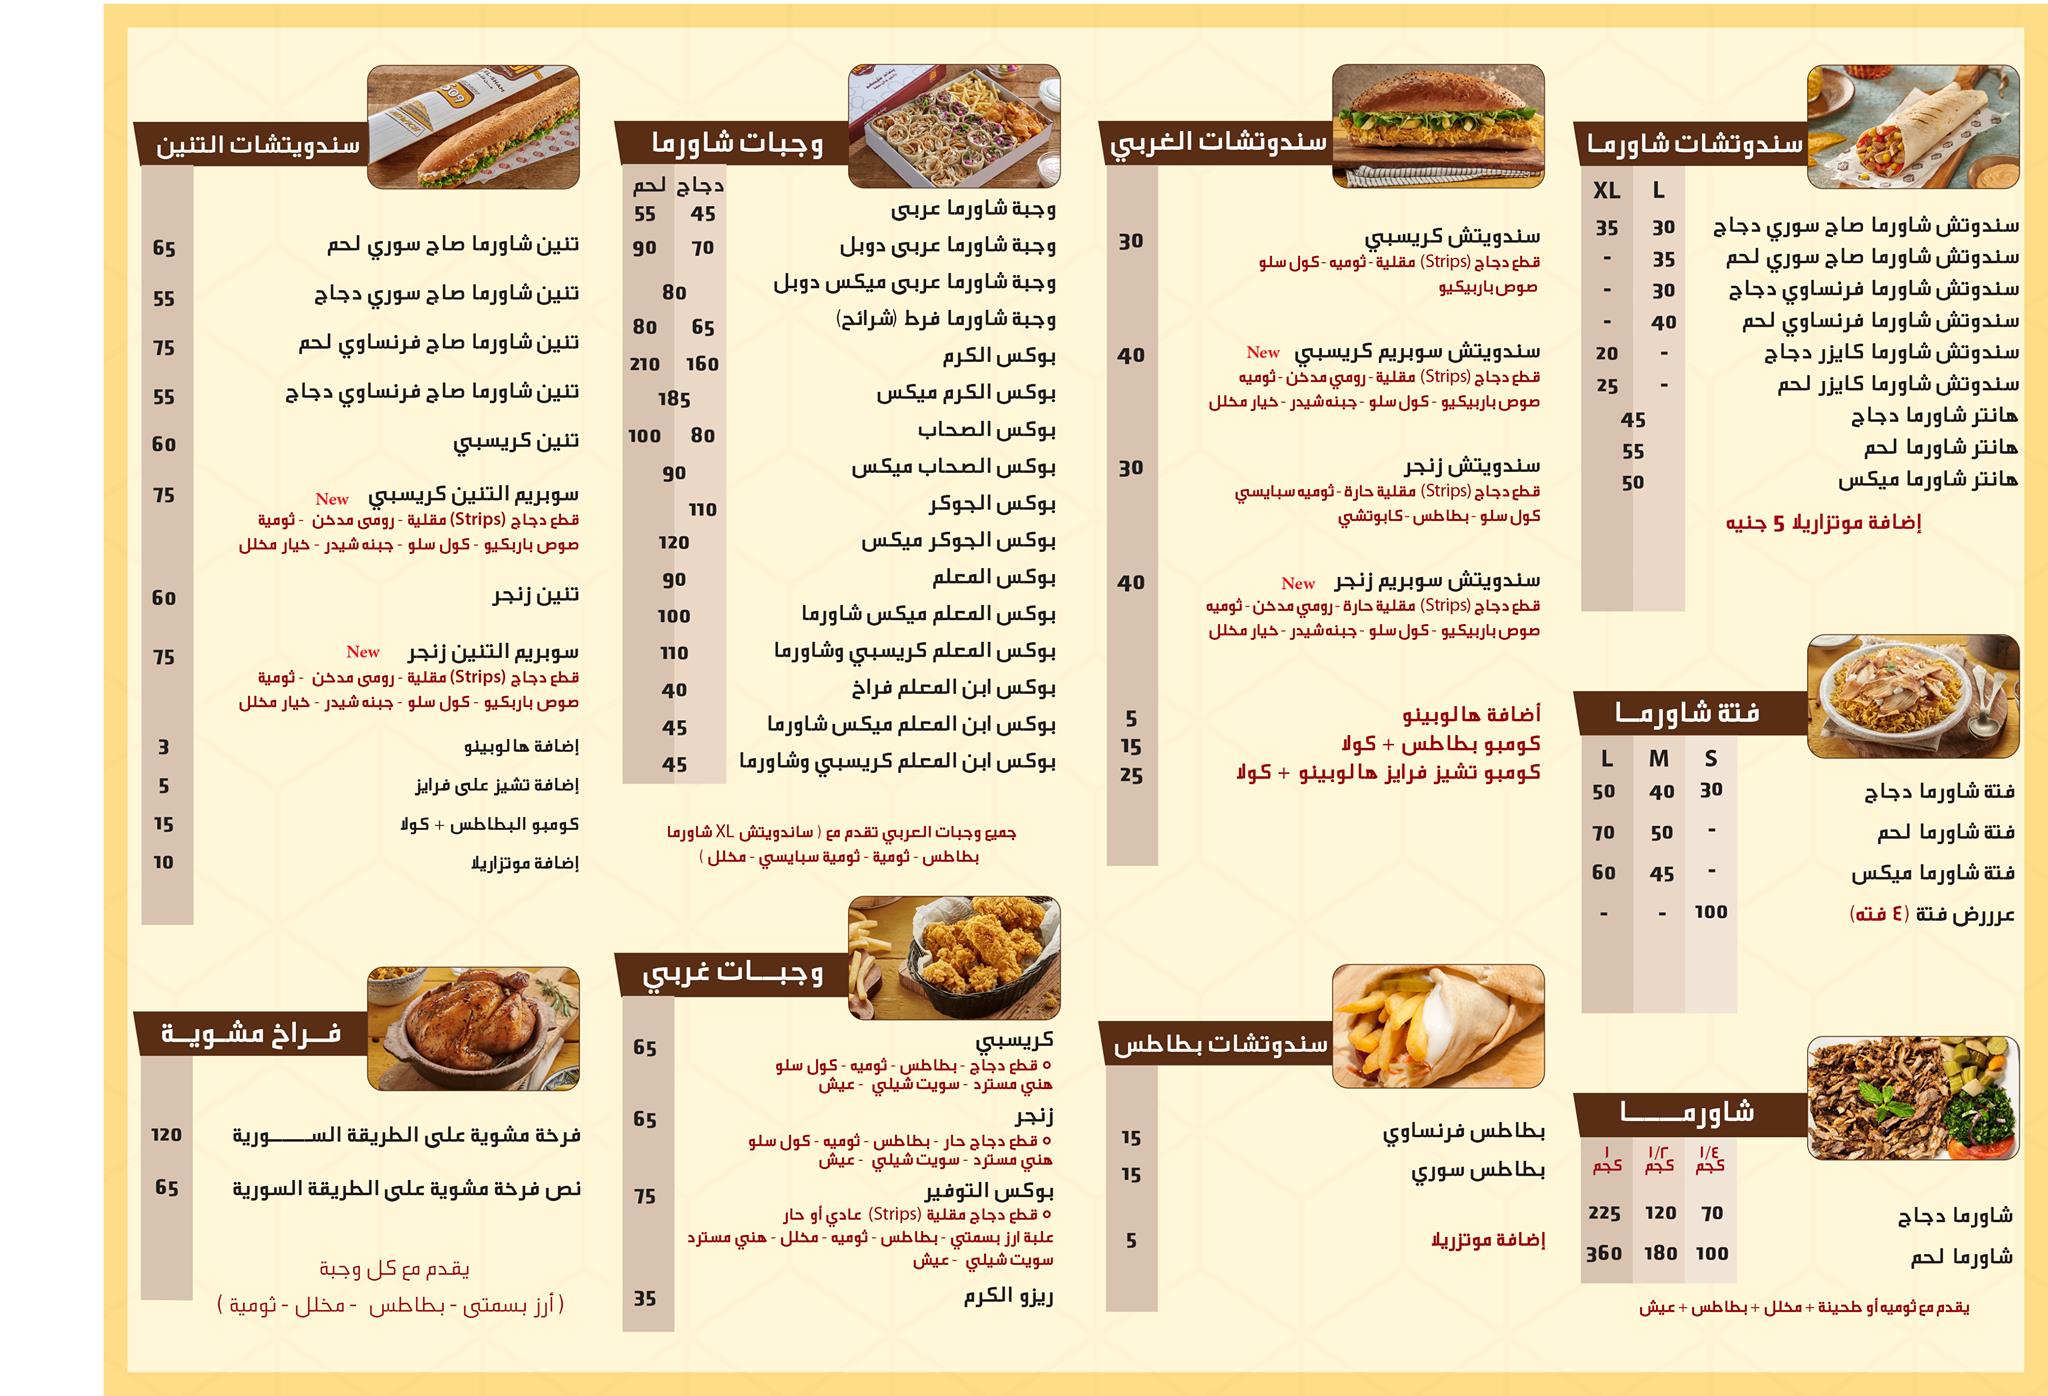  منيو مطعم كرم الشام